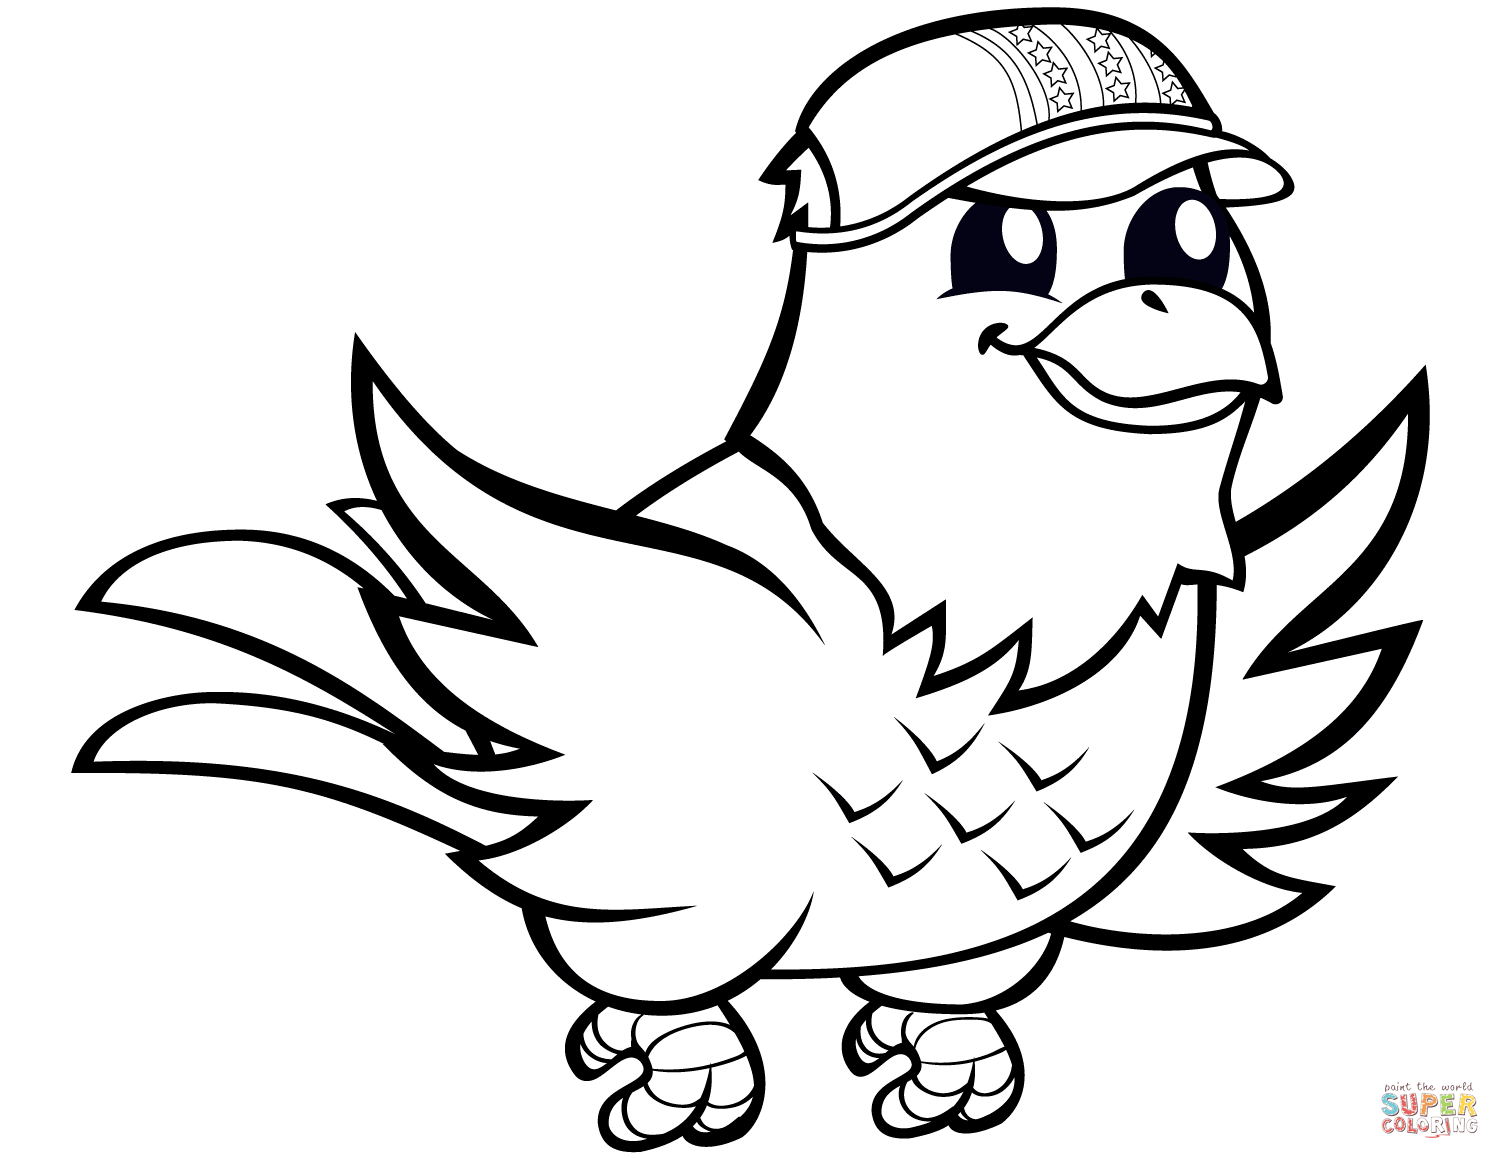 Funny eagle with baseball cap